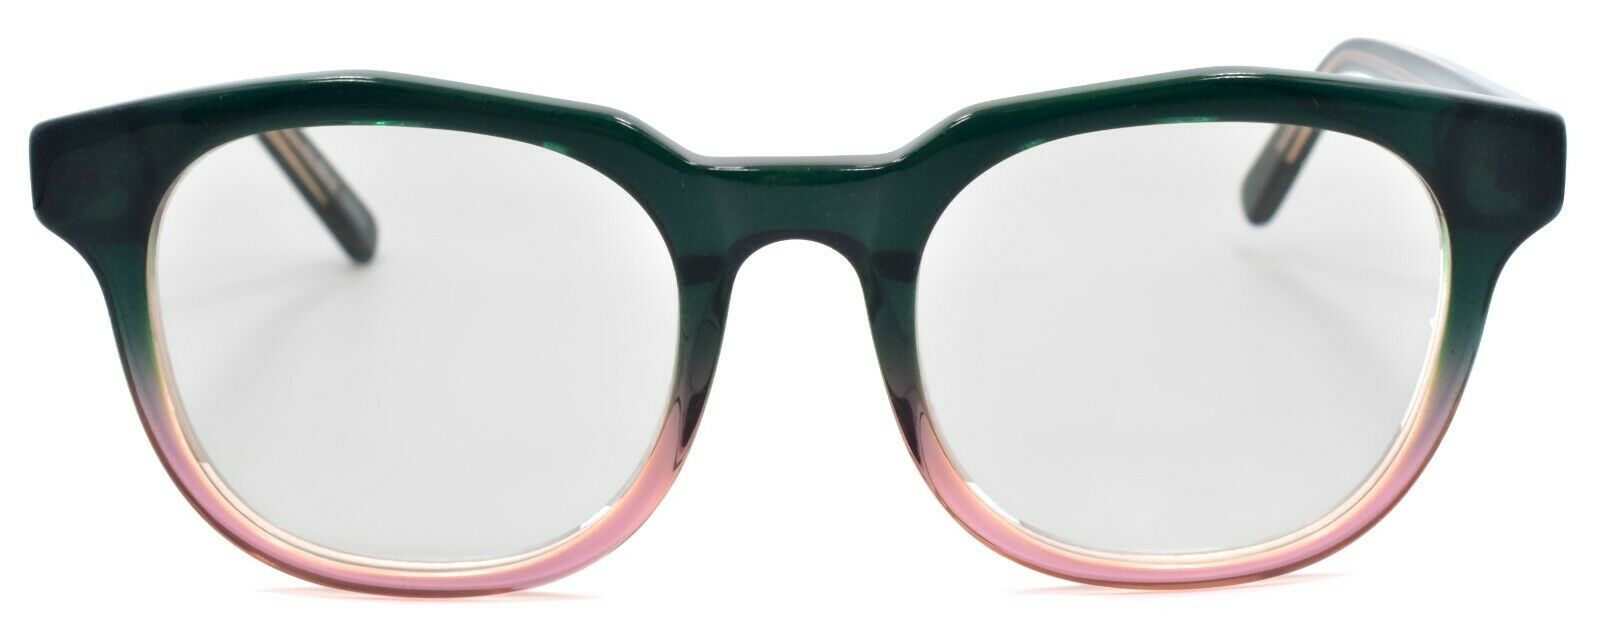 2-Eyebobs Befuddled 2702 26 Women's Reading Glasses Green / Purple +1.00-842754140928-IKSpecs